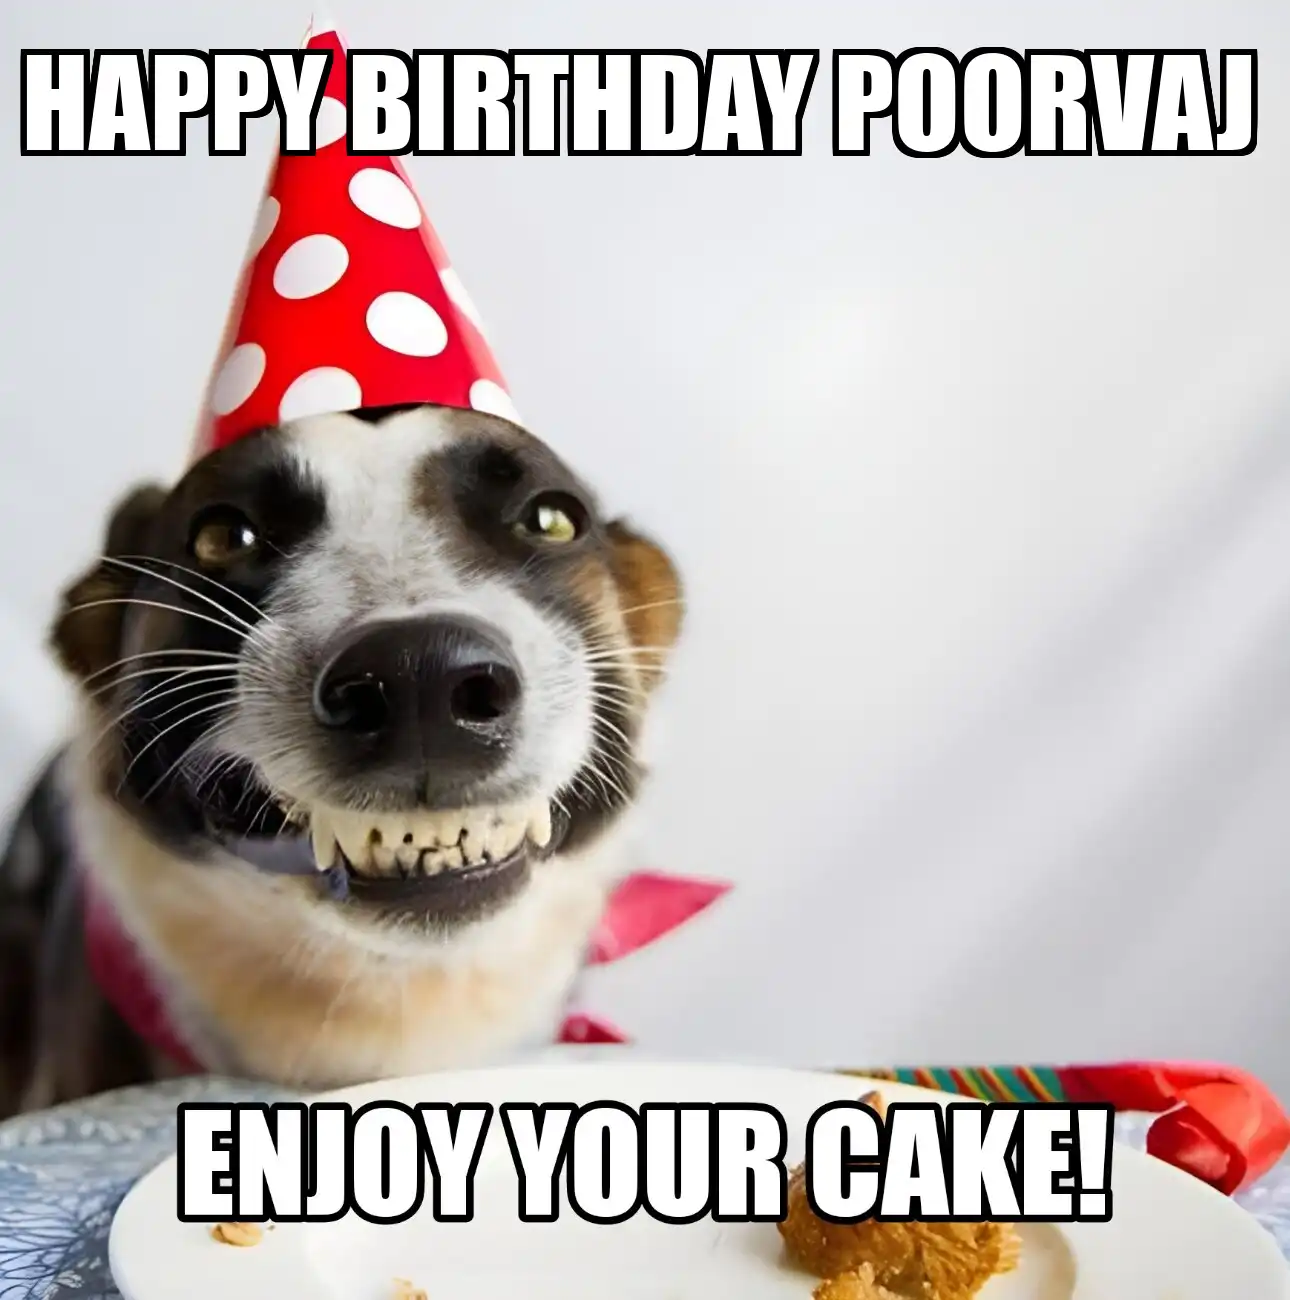 Happy Birthday Poorvaj Enjoy Your Cake Dog Meme